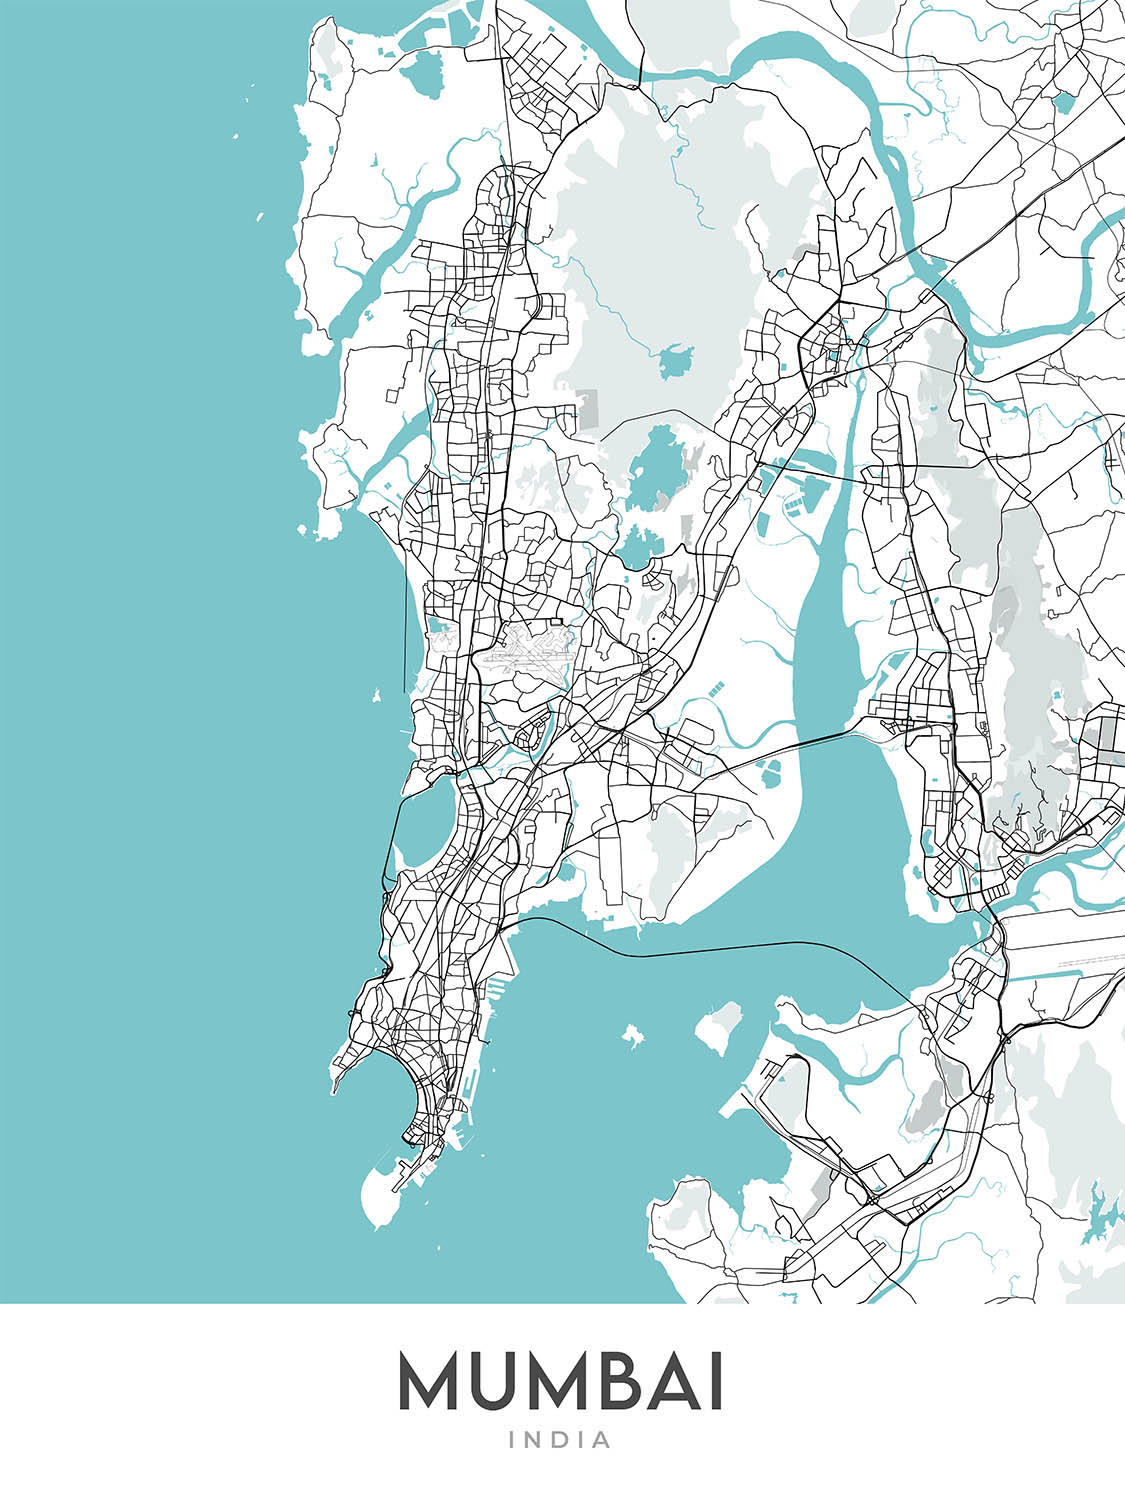 Modern City Map of Mumbai, India: Colaba, Marine Drive, Bandra-Worli Sea Link, Juhu Beach, Powai Lake